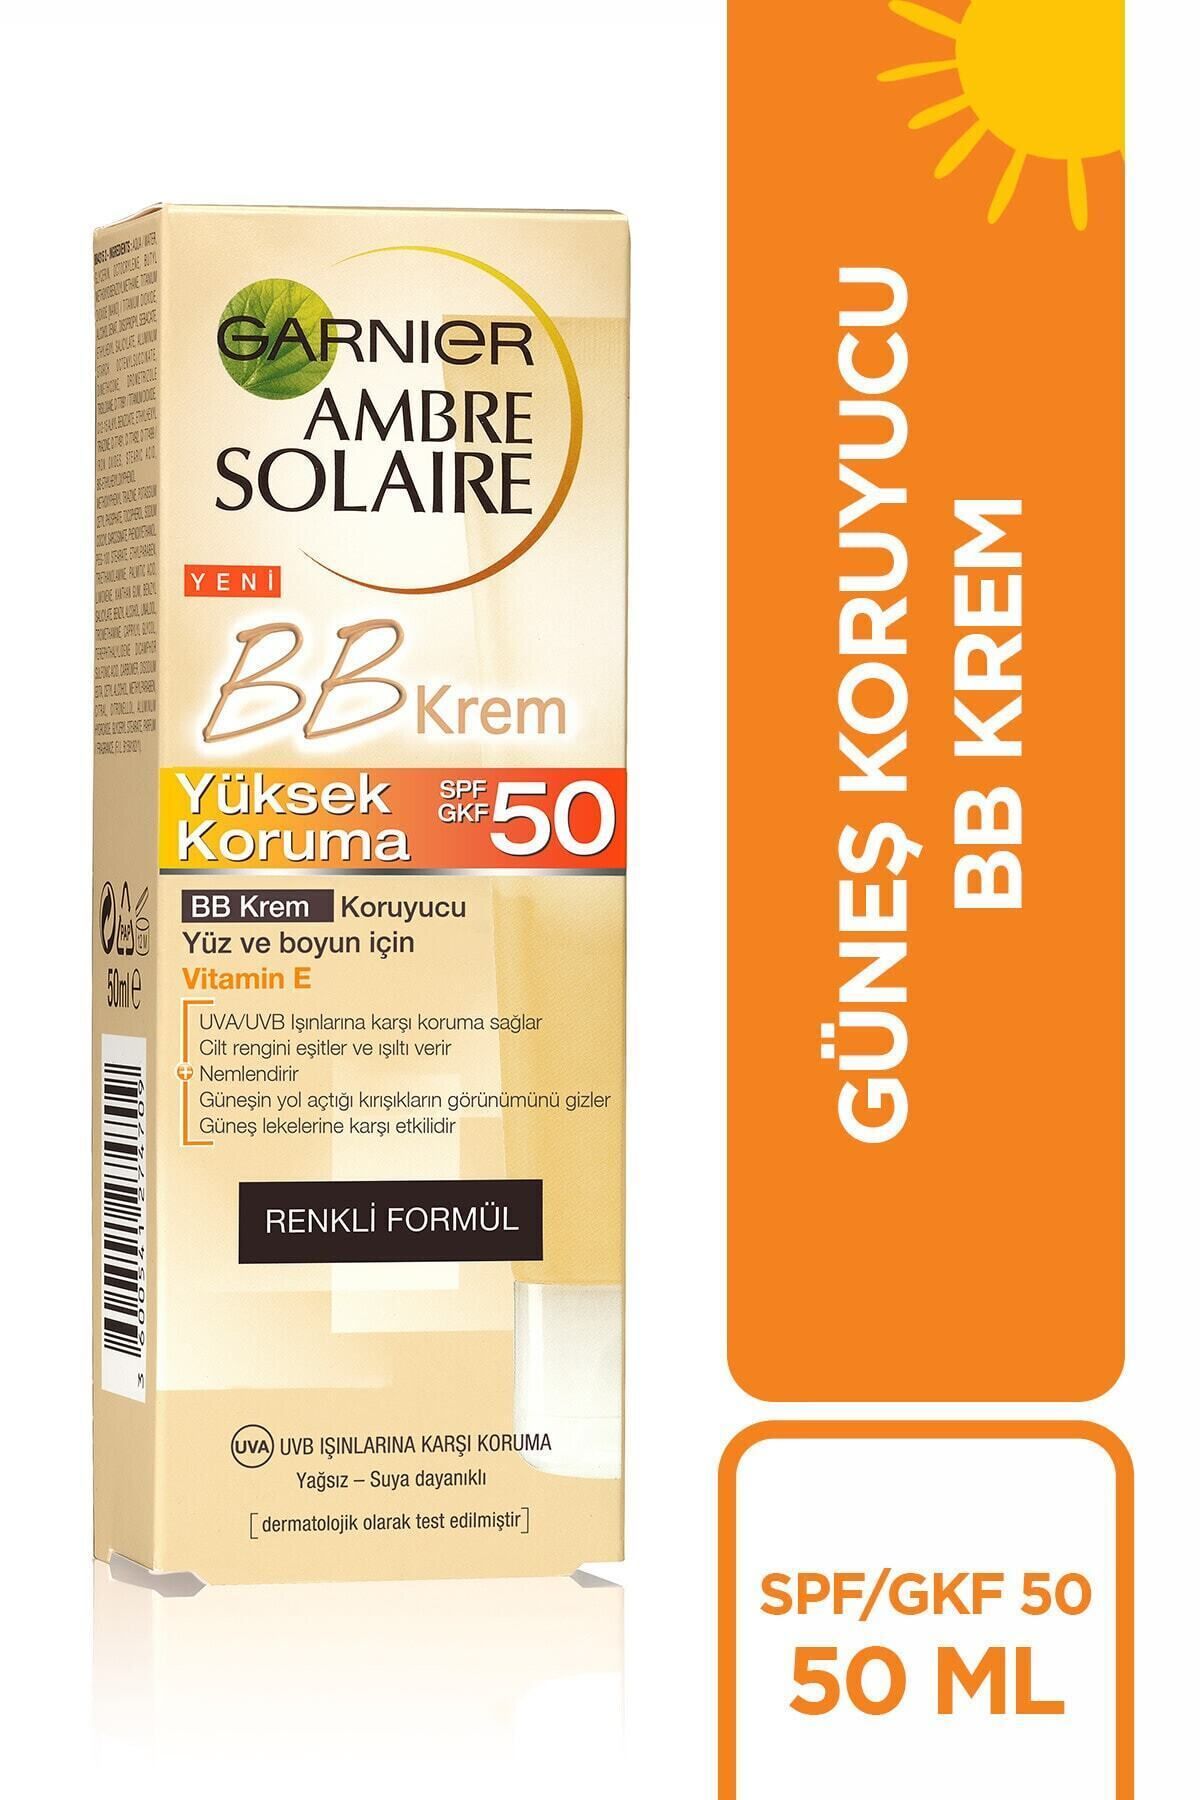 Garnier کرم محافظتی ضد آفتاب صورت و گردن آمبر سولر بی بی سان سور با SPF50 حجم 50 میلی لیتر